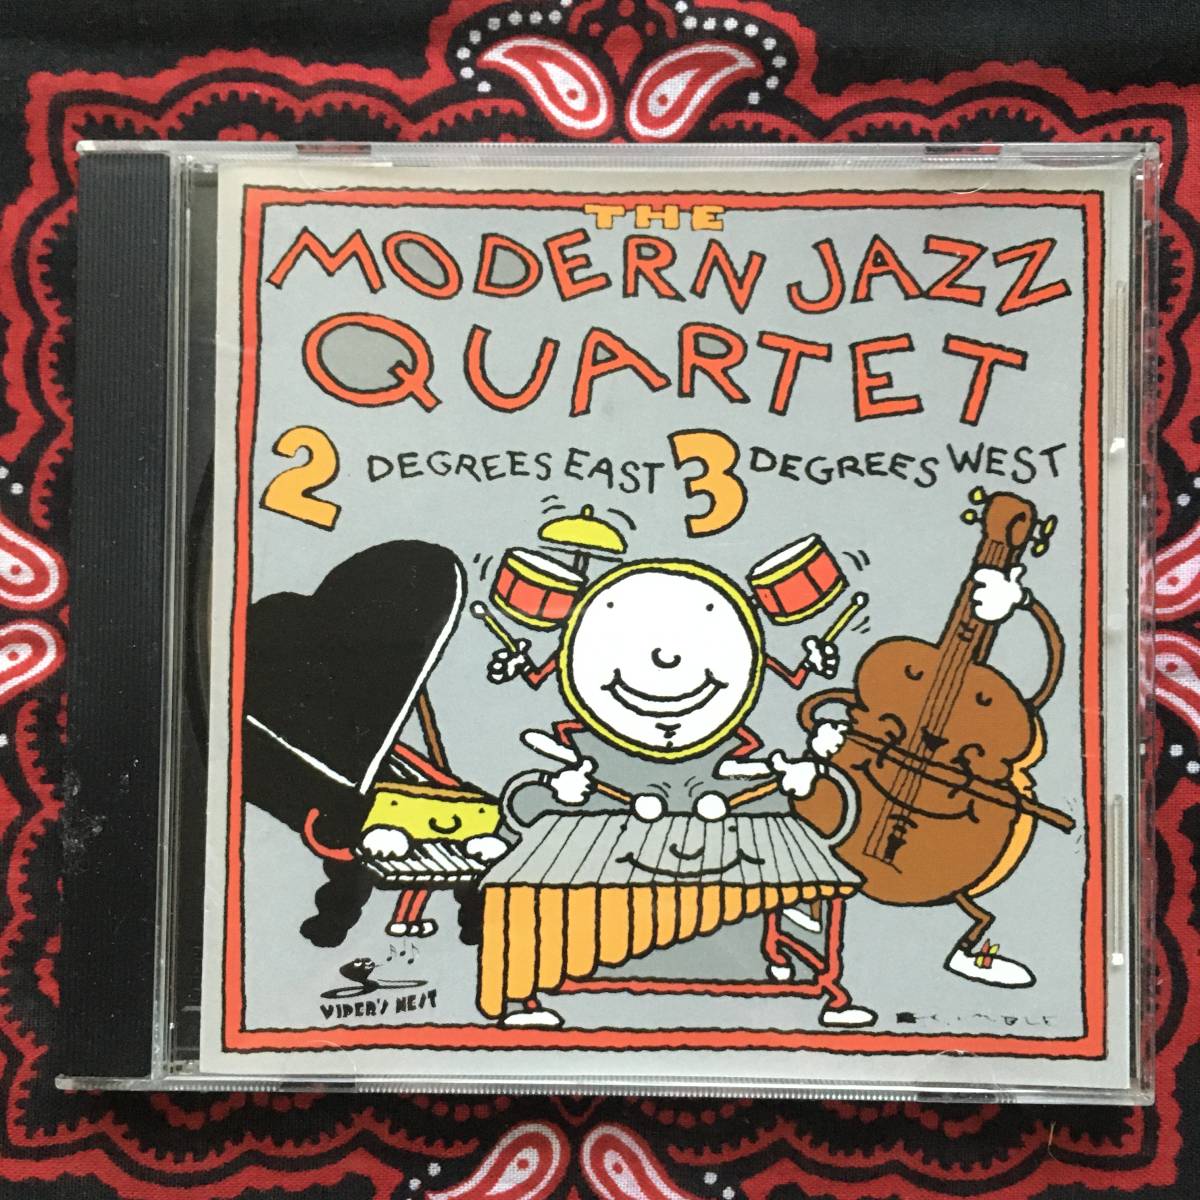 MJQ/The Modern Jazz Quartet/2 Degrees East 3 Degrees West/ビル・パーキンス/ジム・ホール/ジョン・ルイス/パーシー・ヒース/チコ・_画像2